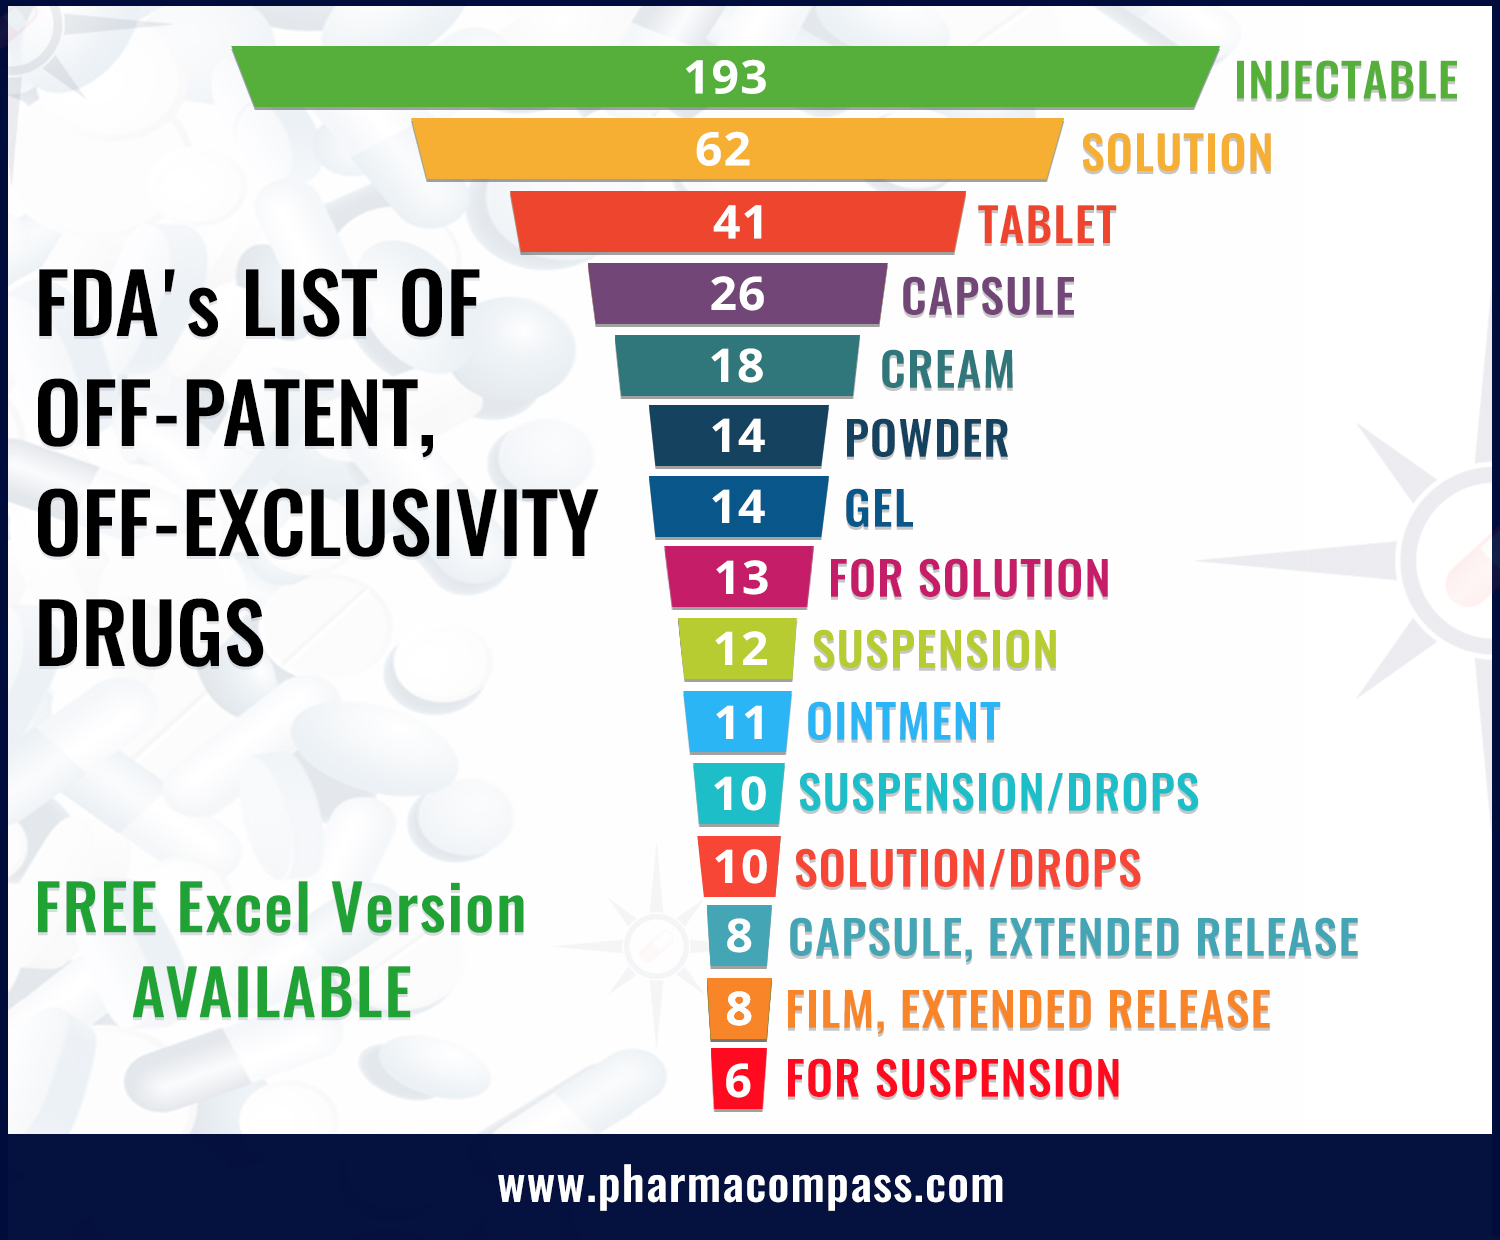 USFDA, China share list of drugs that need generic alternatives